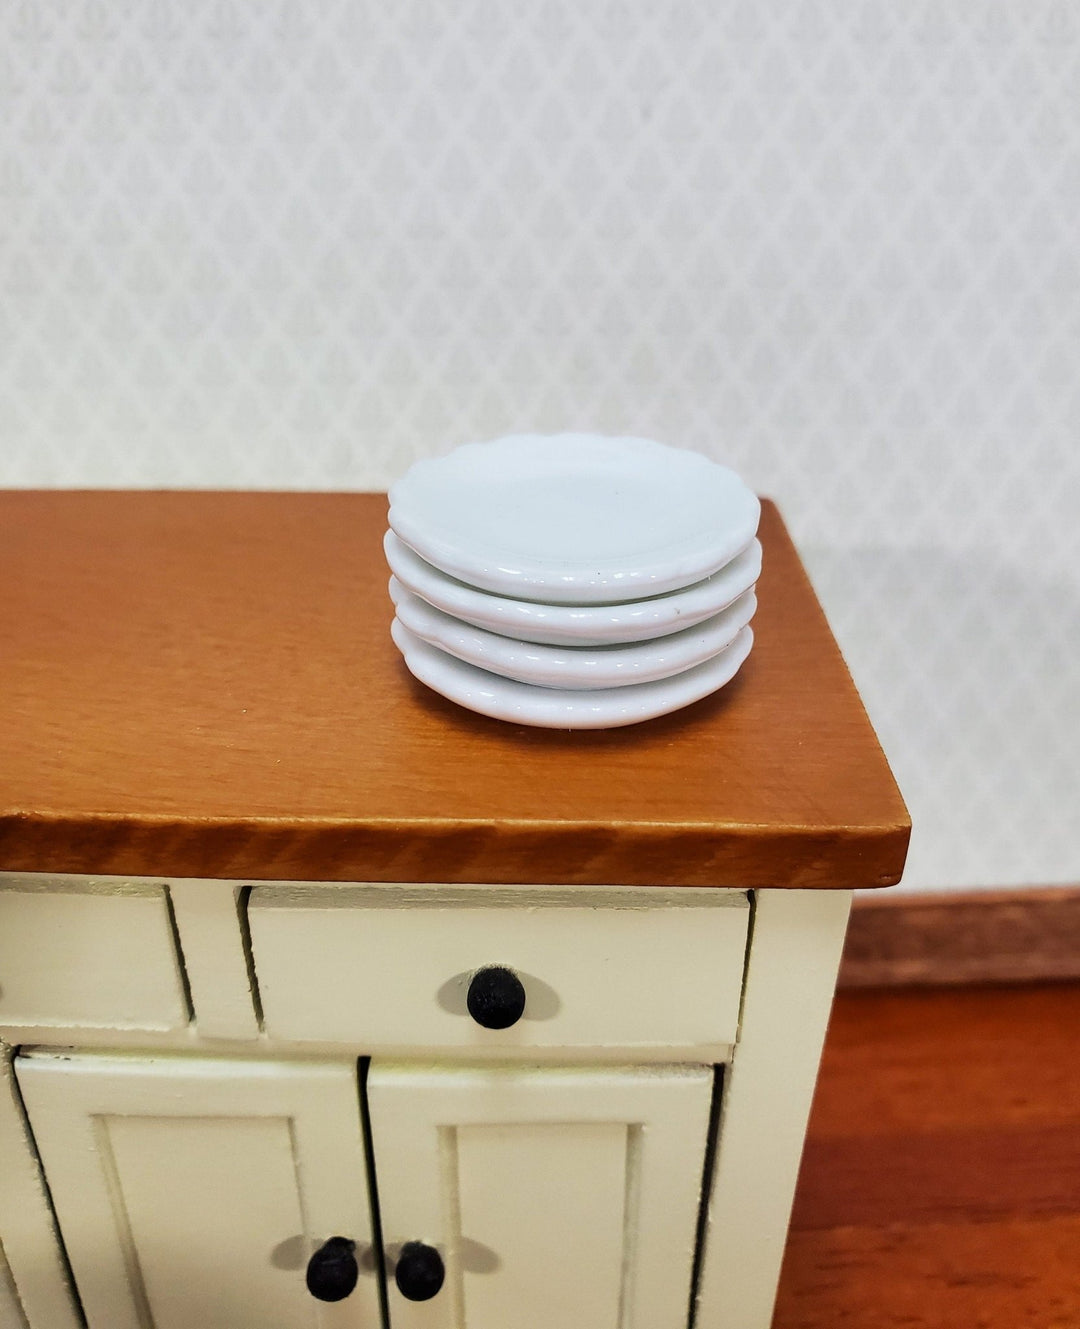 Dollhouse Dinner Plates All White Ceramic Scalloped Edges x4 1:12 Scale 1" - Miniature Crush